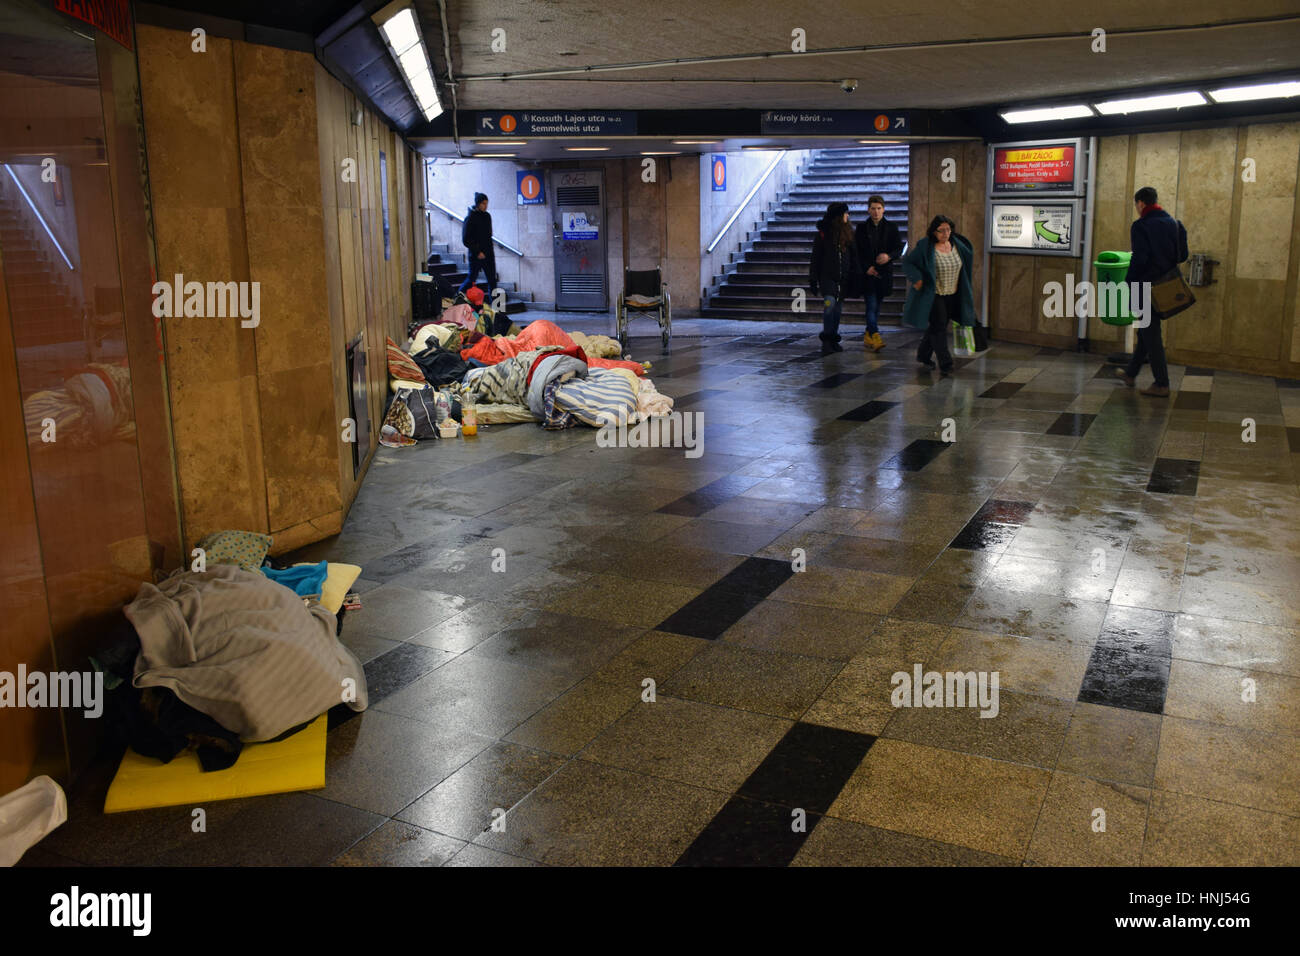 Homeless People Sleeping In Metro Budapest Hungary February